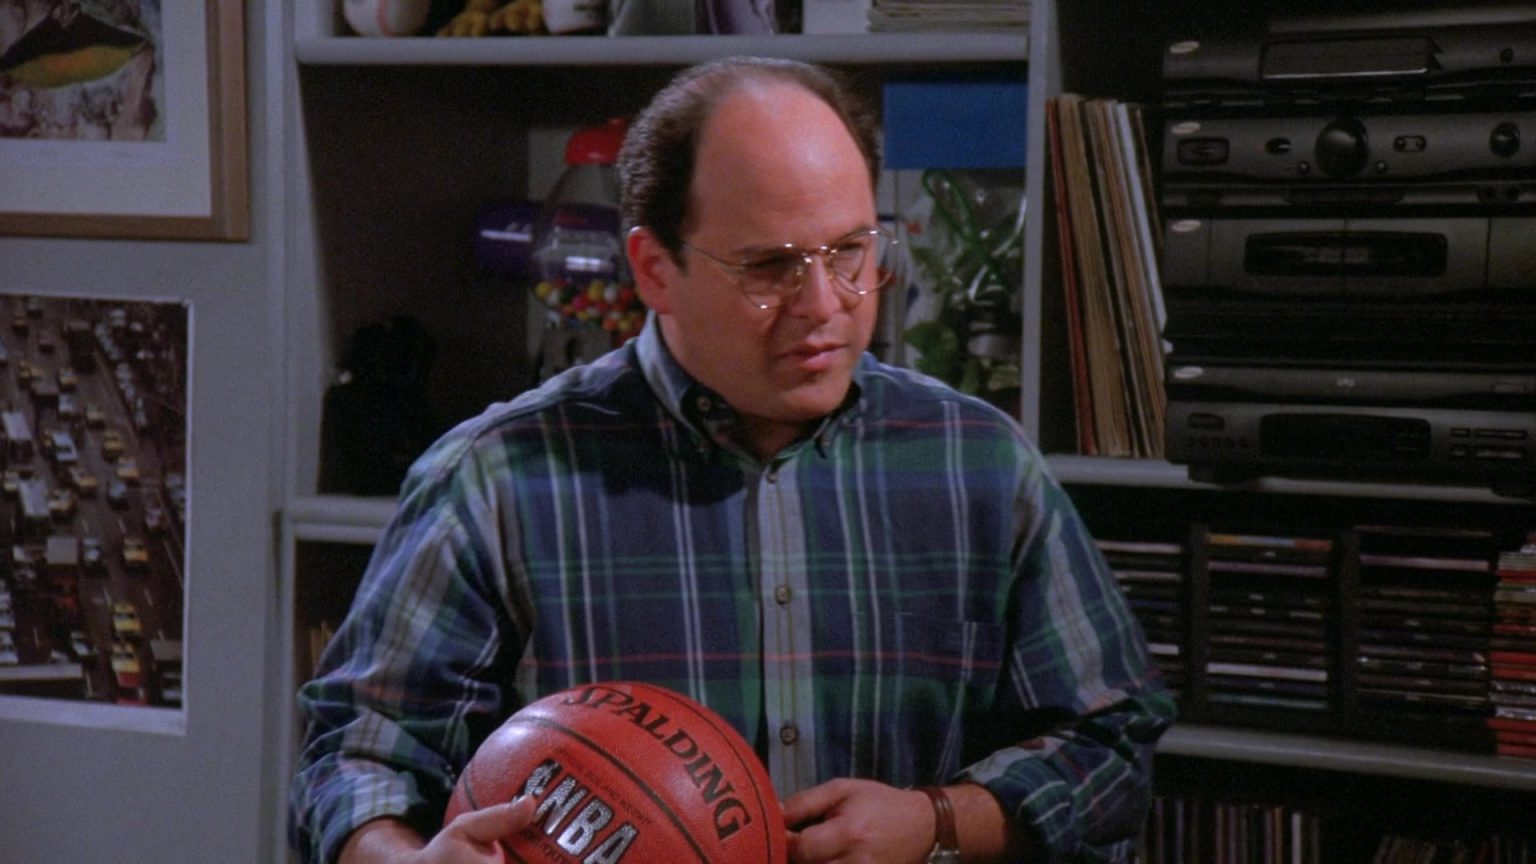 Spalding-x-NBA-Basketball-Held-by-Jason-Alexander-as-George-Costanza-in-Seinfeld-Season-7-Epis...jpg